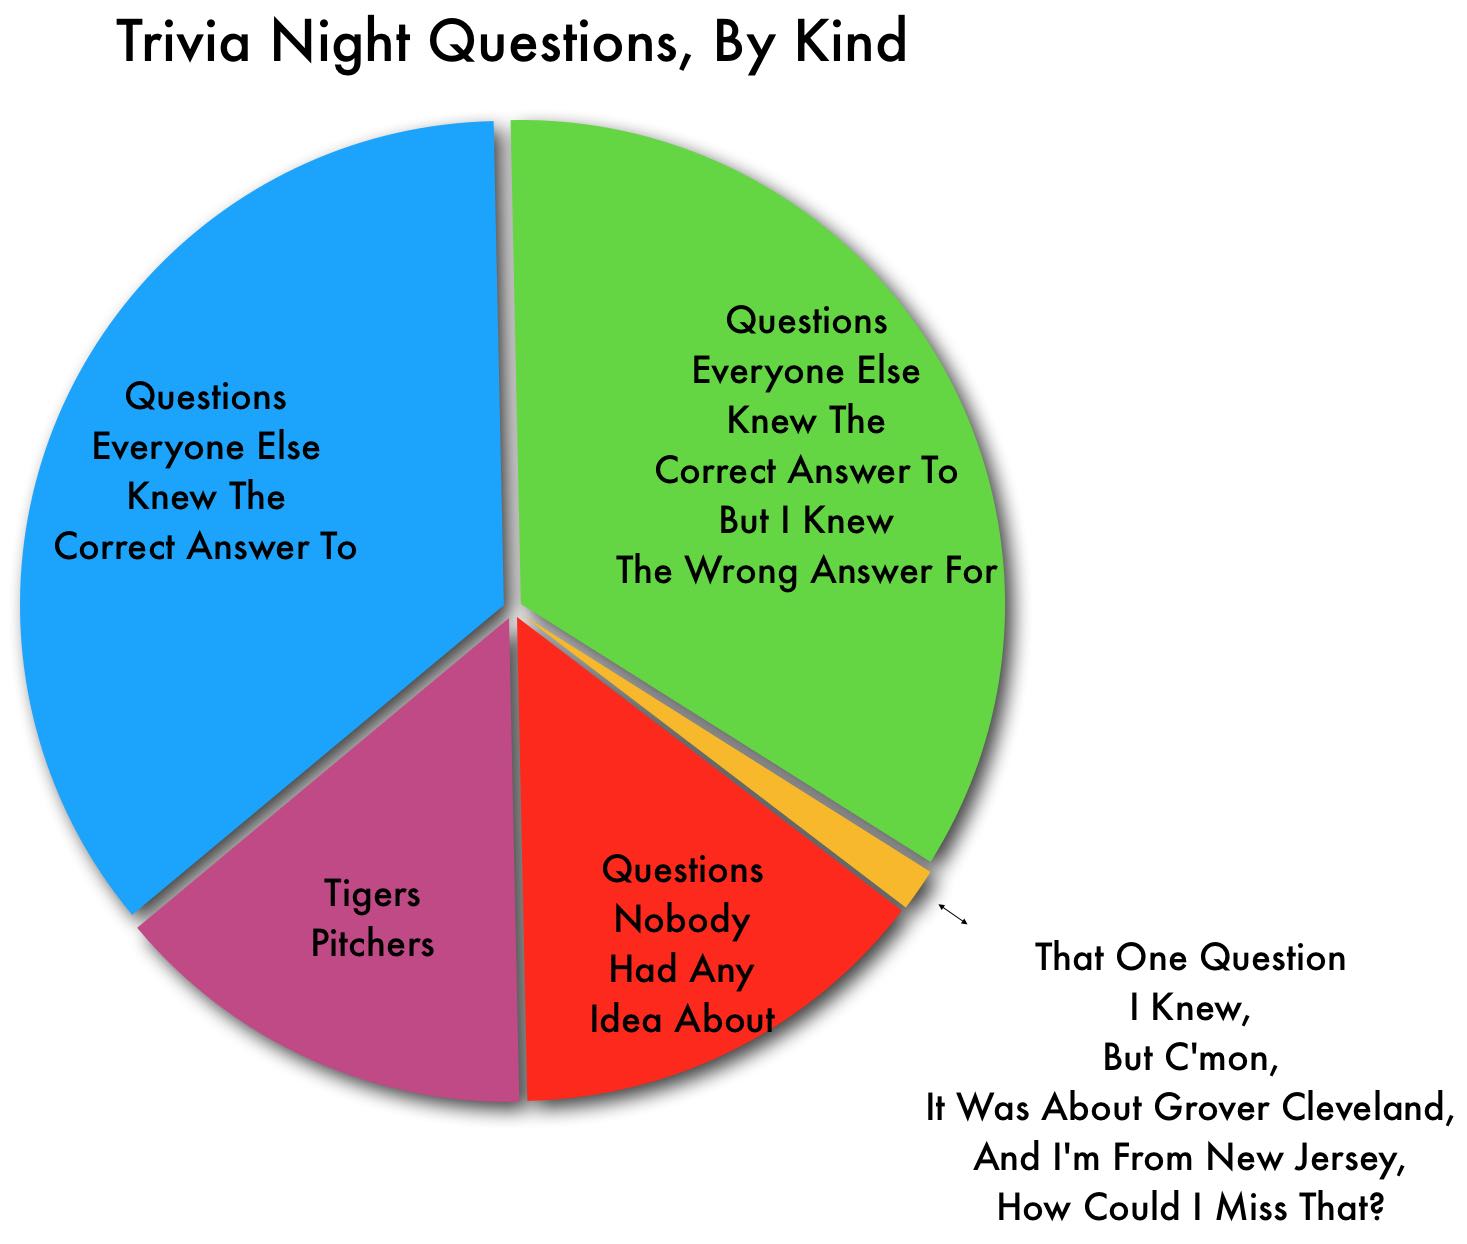 Question everyone. Trivia Night. Trivia questions. The Night in question. Trivia перевод.